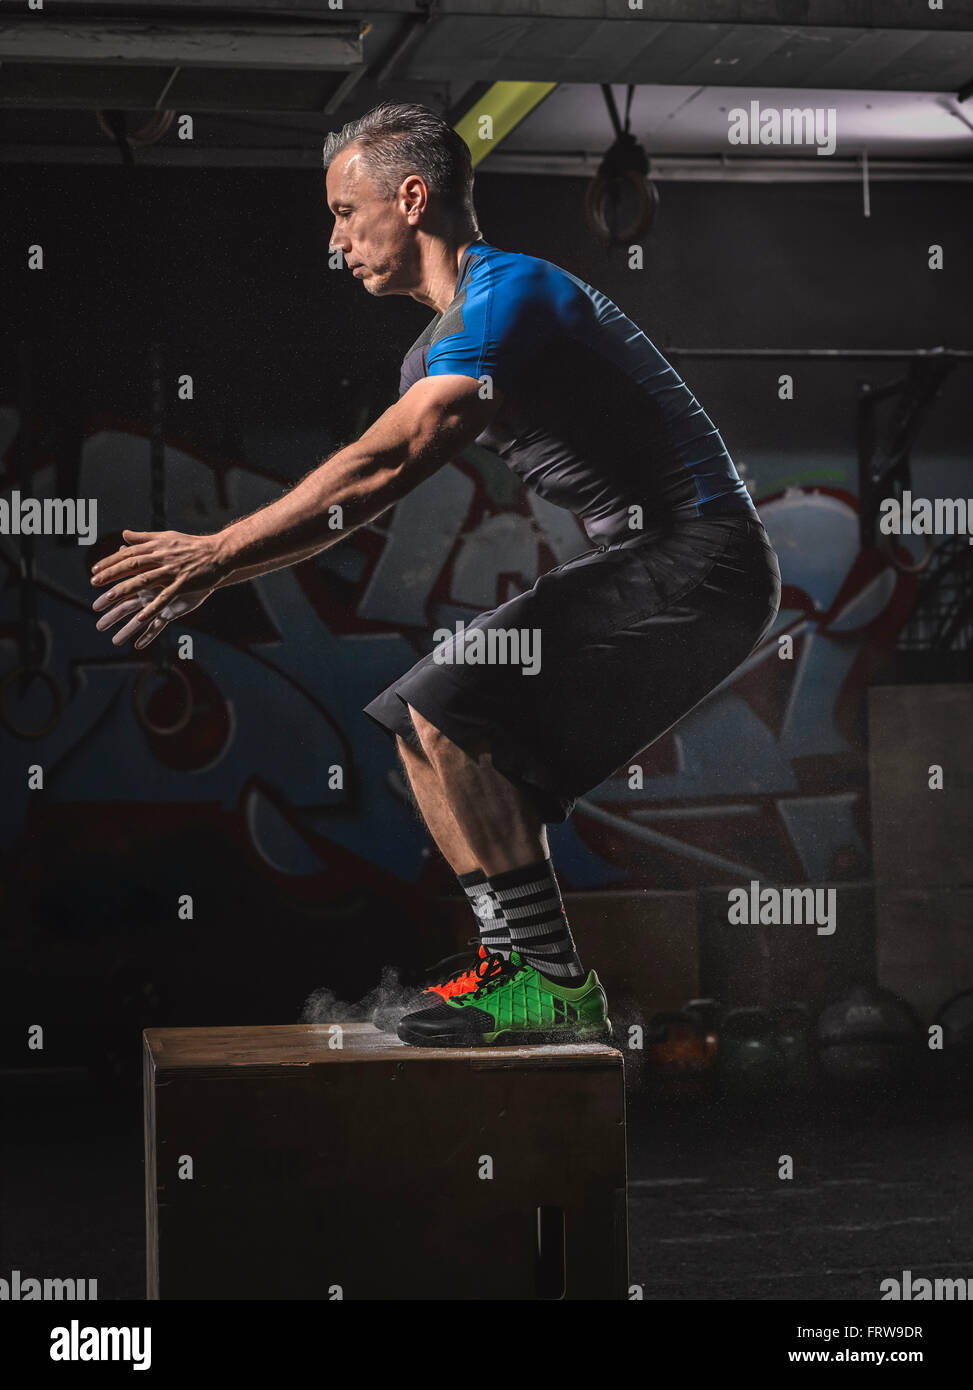 Mature crossfit athlete doing a box jump Stock Photo